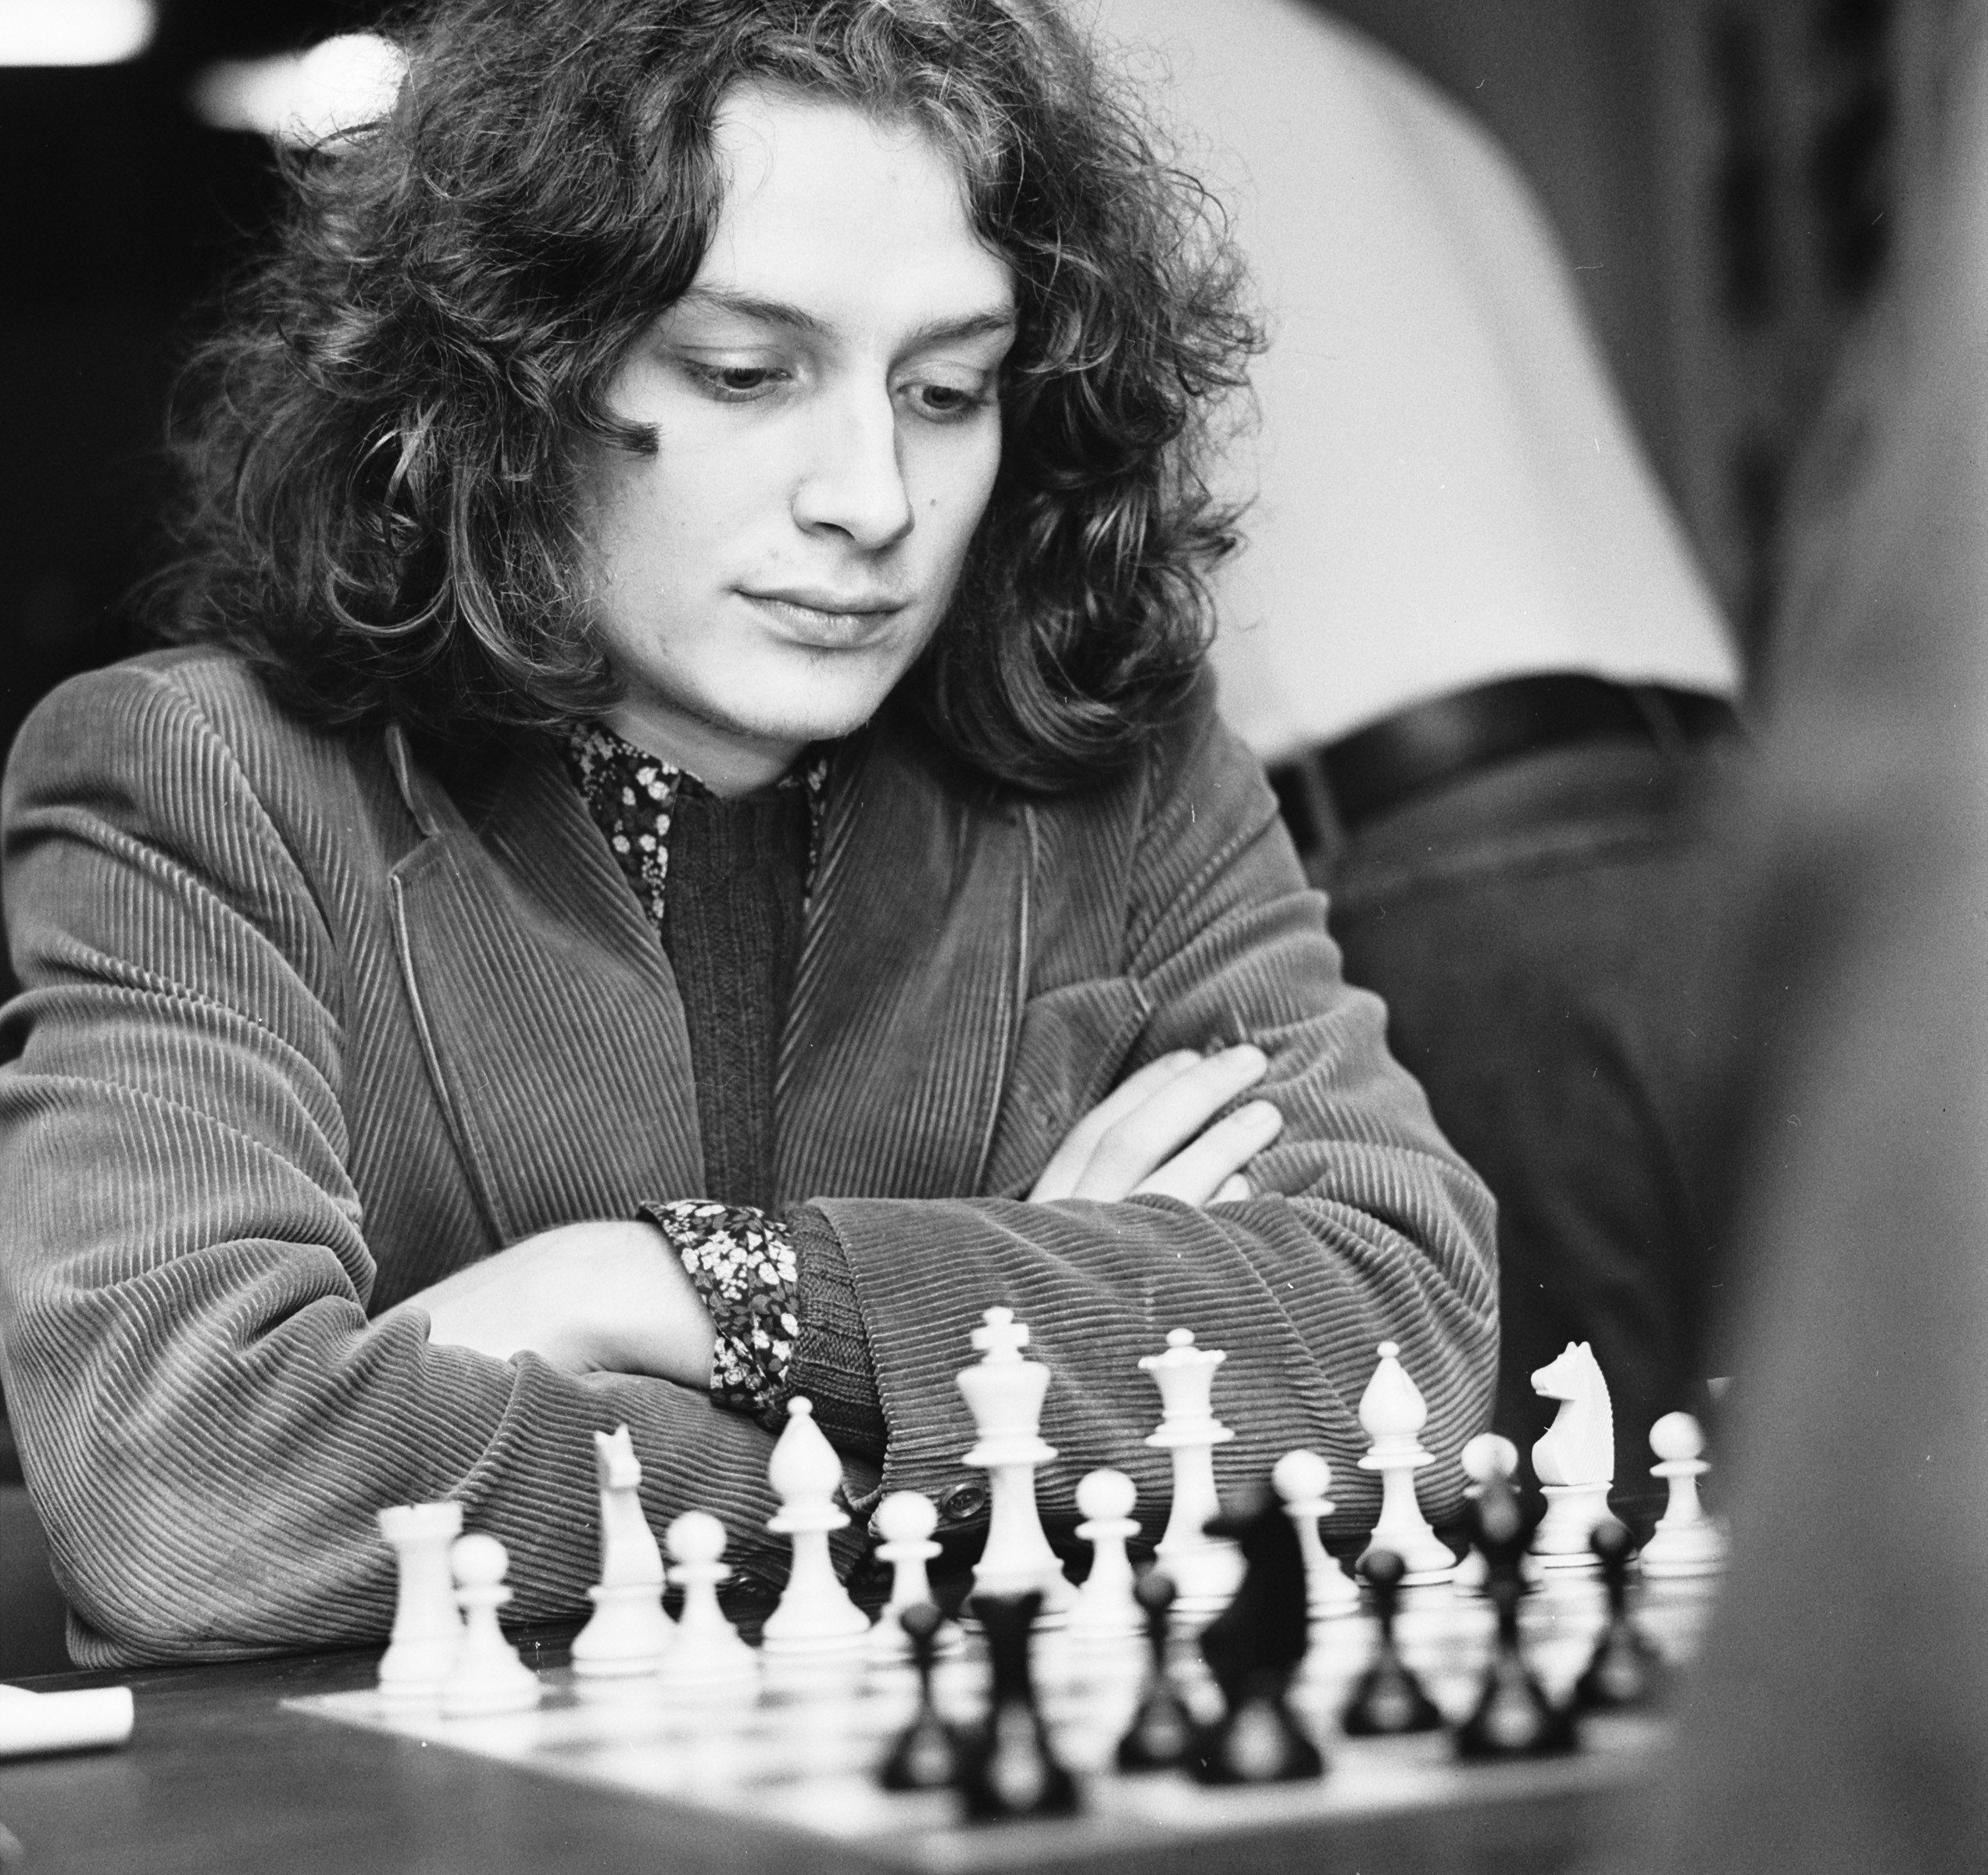 Chess: Bobby Fischer v Boris Spassky 1972 remembered at Reykjavik